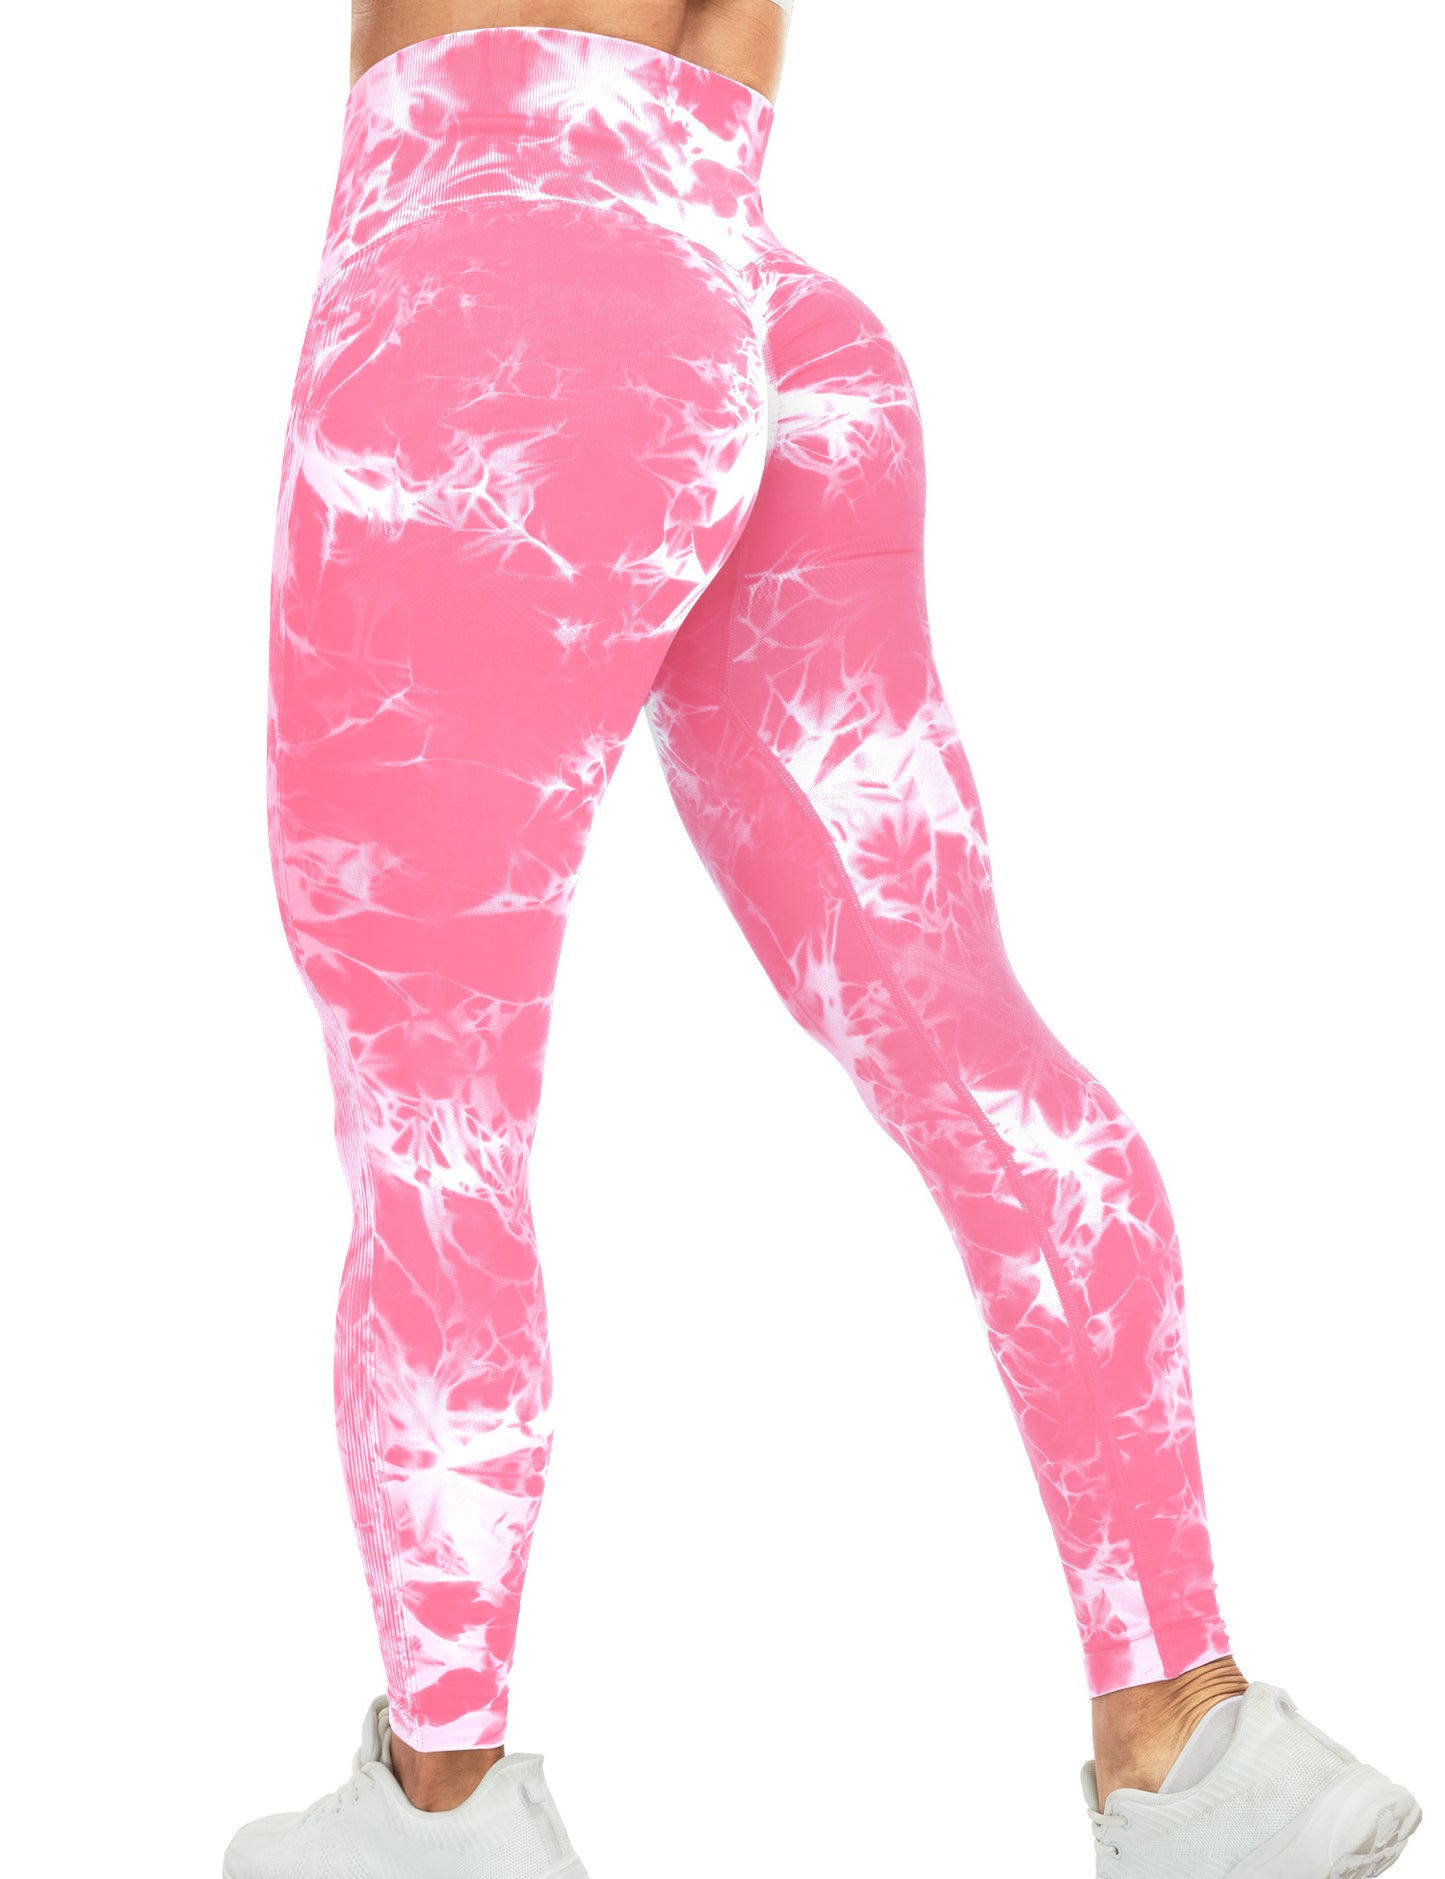 HIGORUN Tie-Dye Workout Seamless Leggings for Women High Waist Gym Leggings Yoga Pants Pink